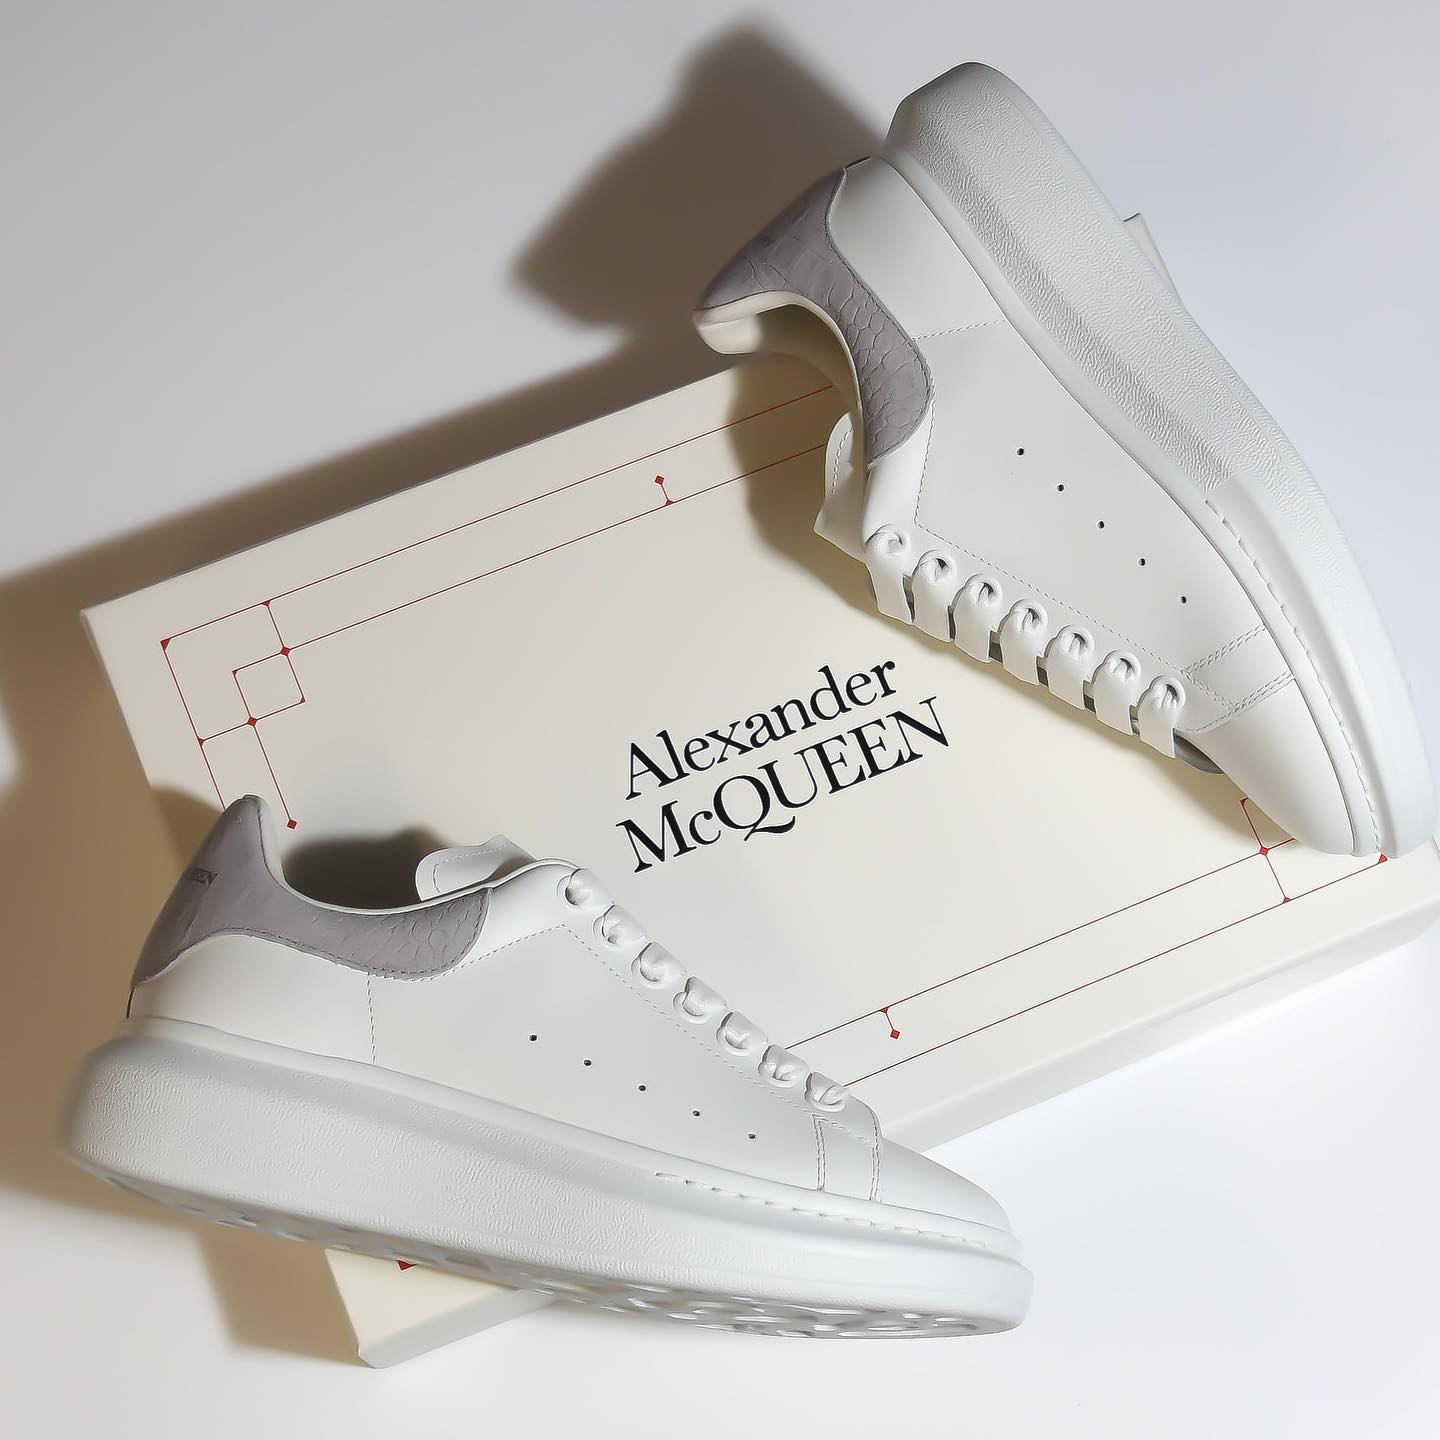 SNEAKER alexandermcqueen sneakers — now online. DKFSDHAFKHSDKFJSD.jpg